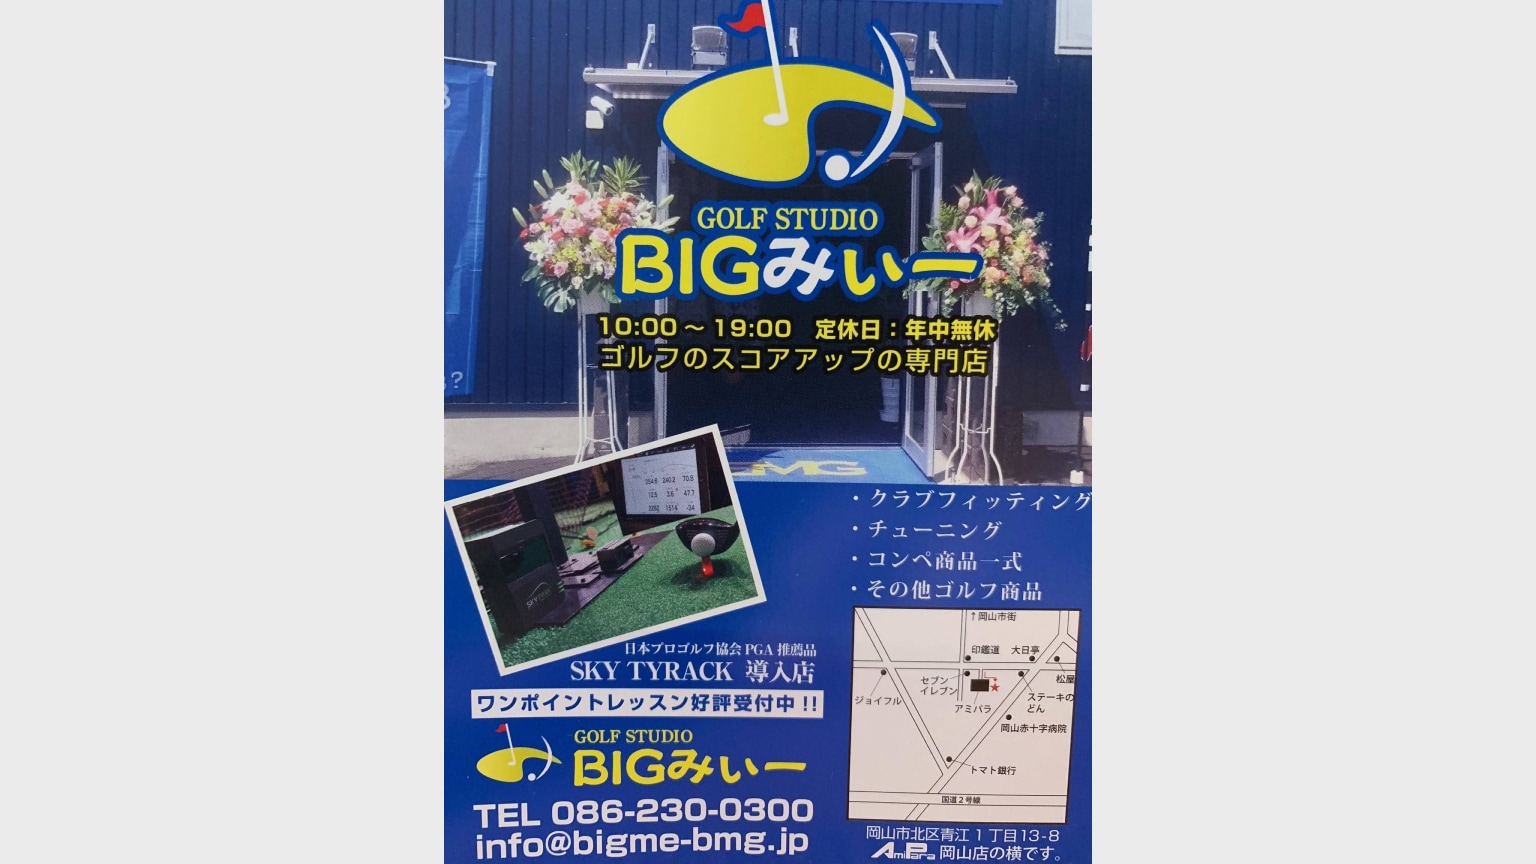 GOLF STUDIO BIGみぃー